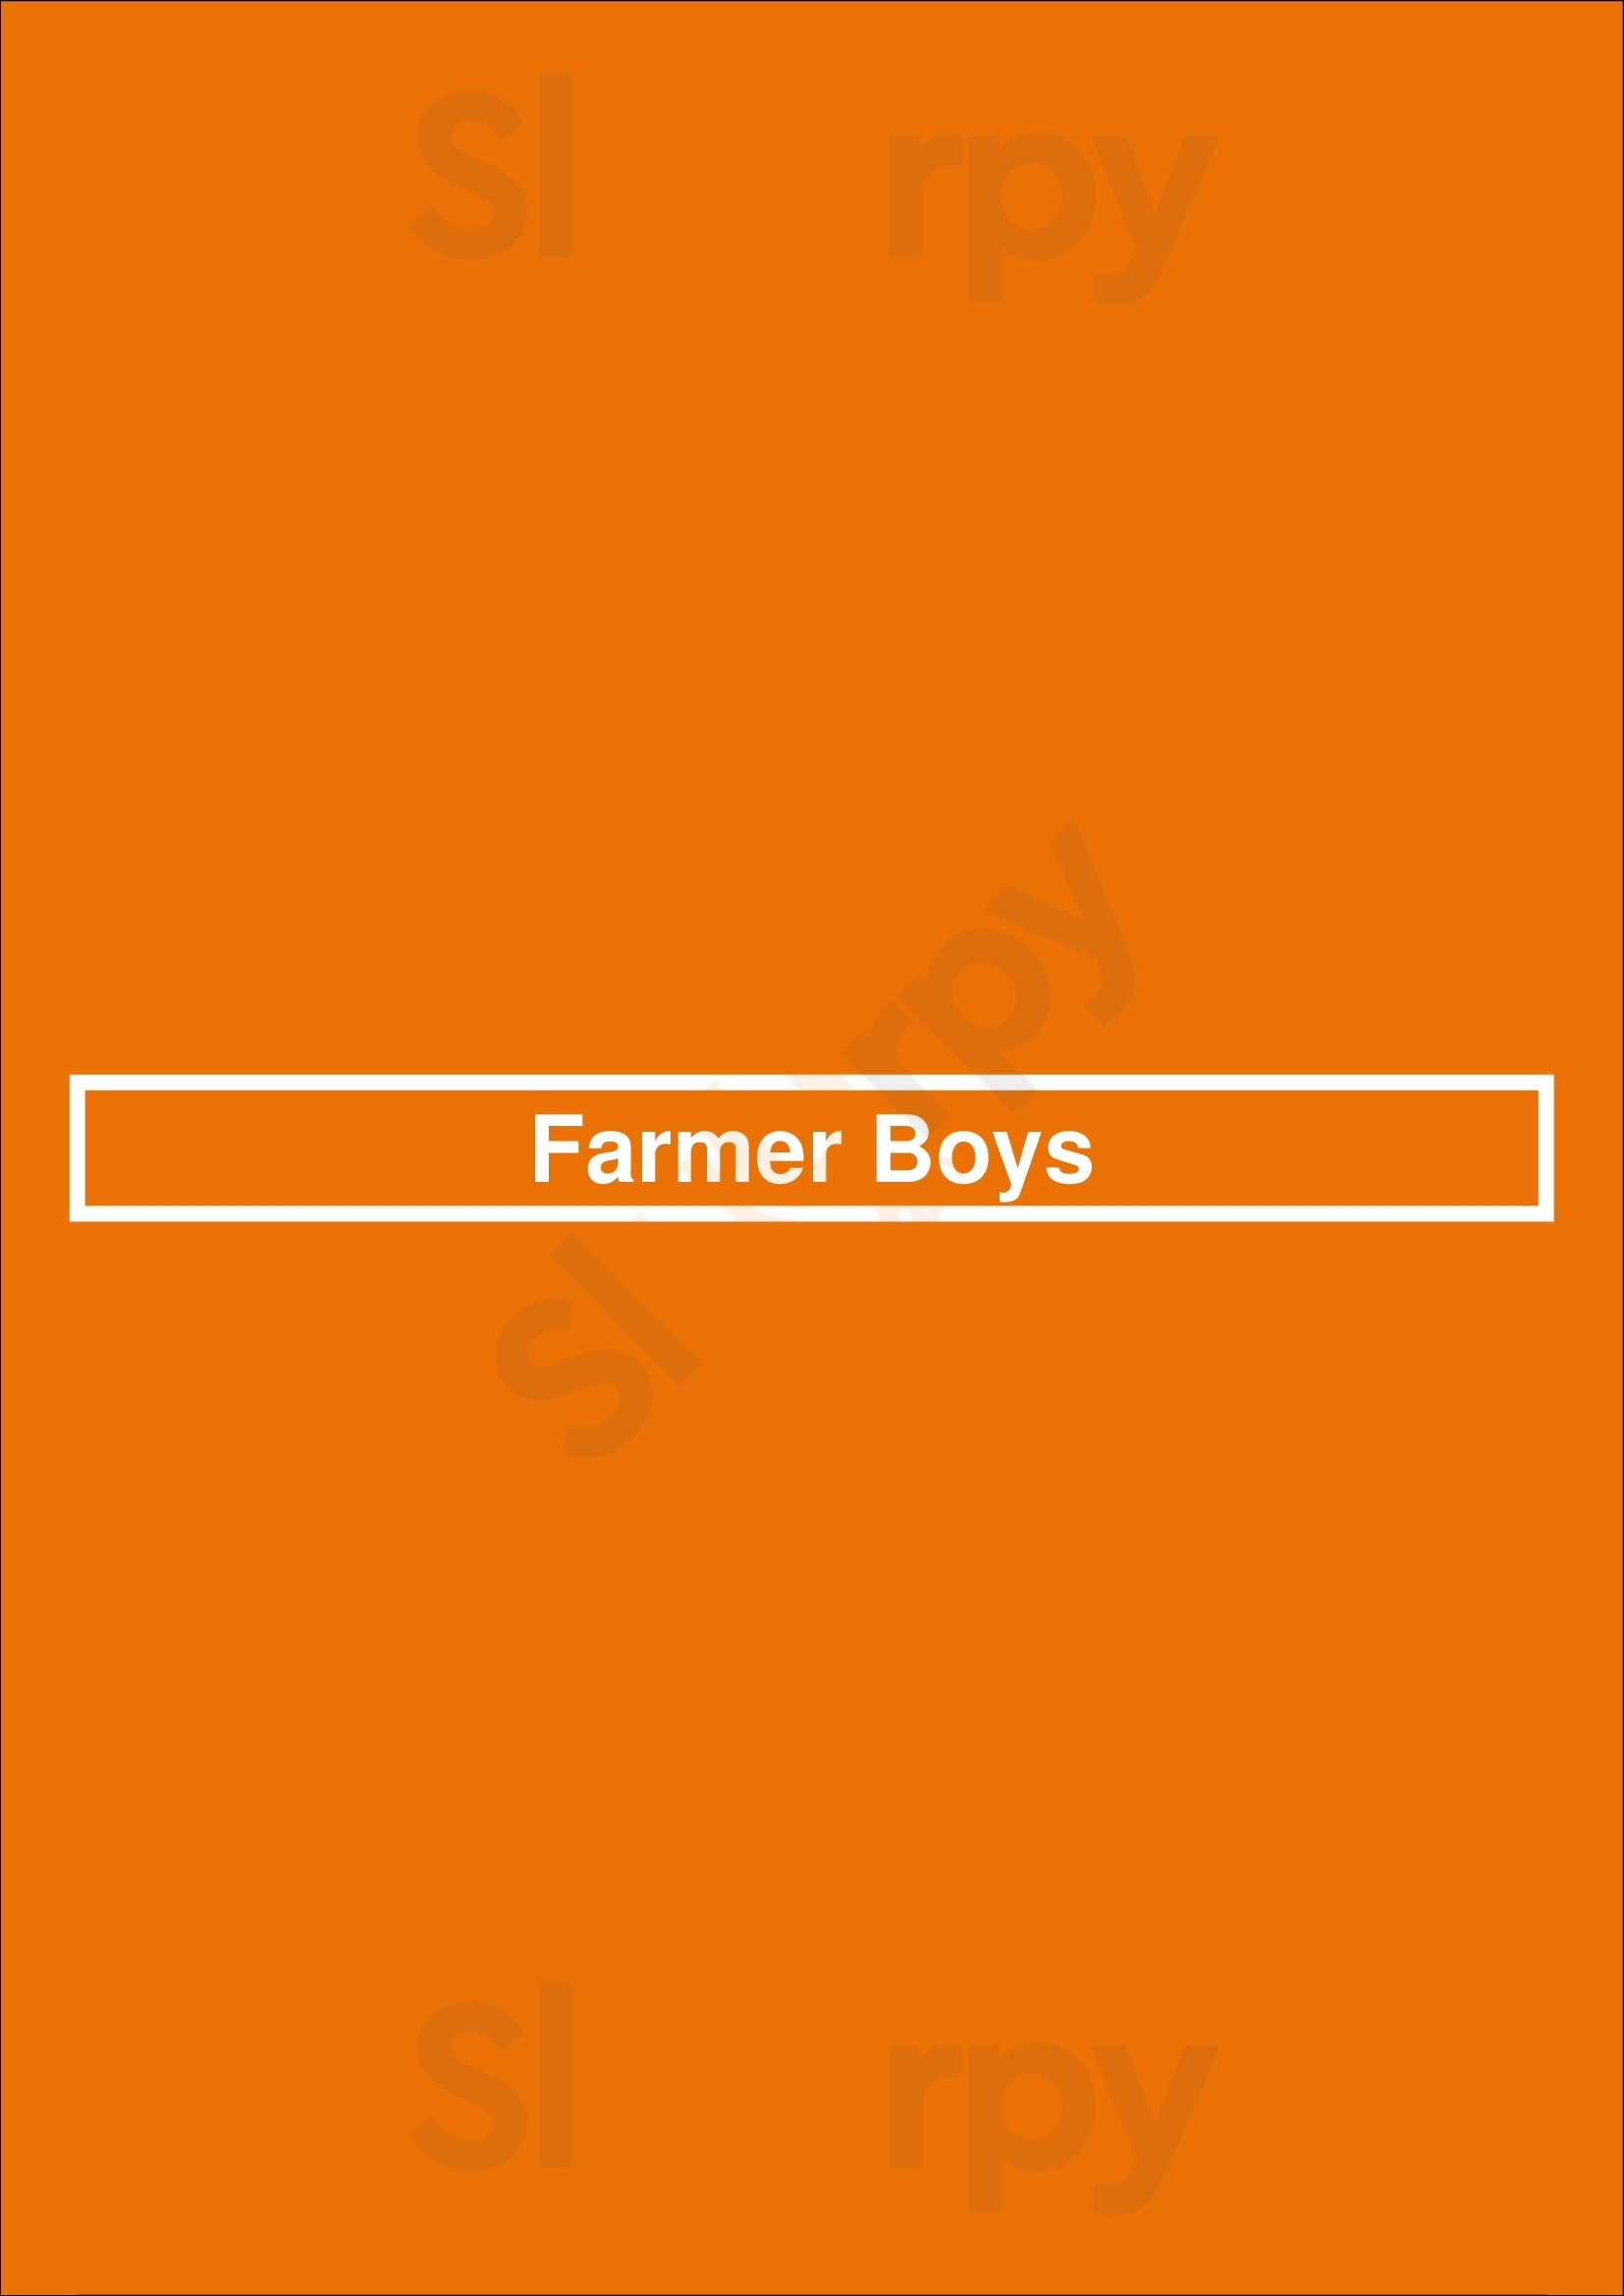 Farmer Boys Lancaster Menu - 1